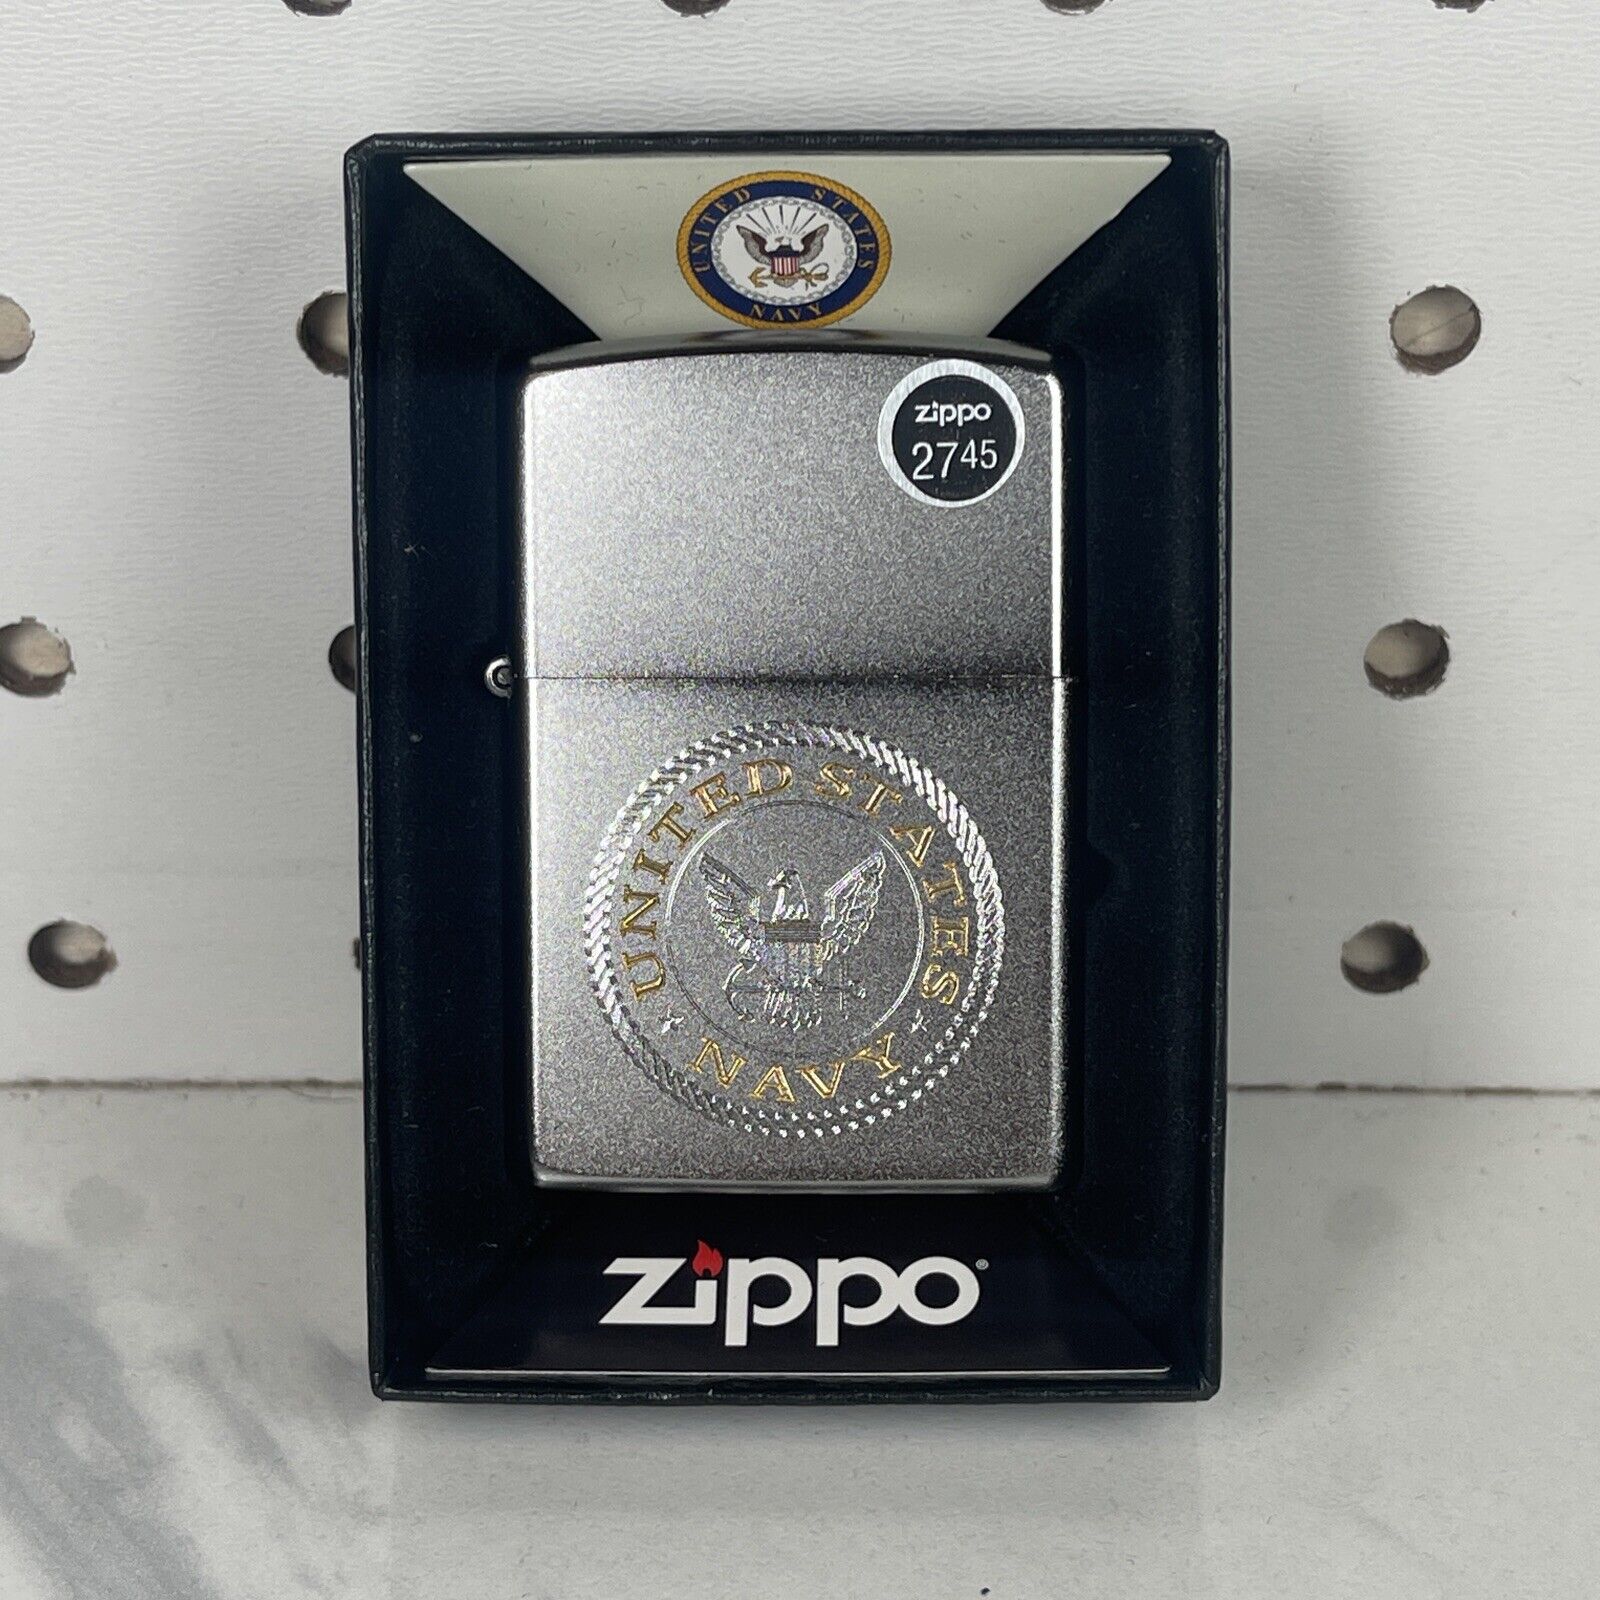 ZIPPO US NAVY Lighter BRAND NEW IN BOX